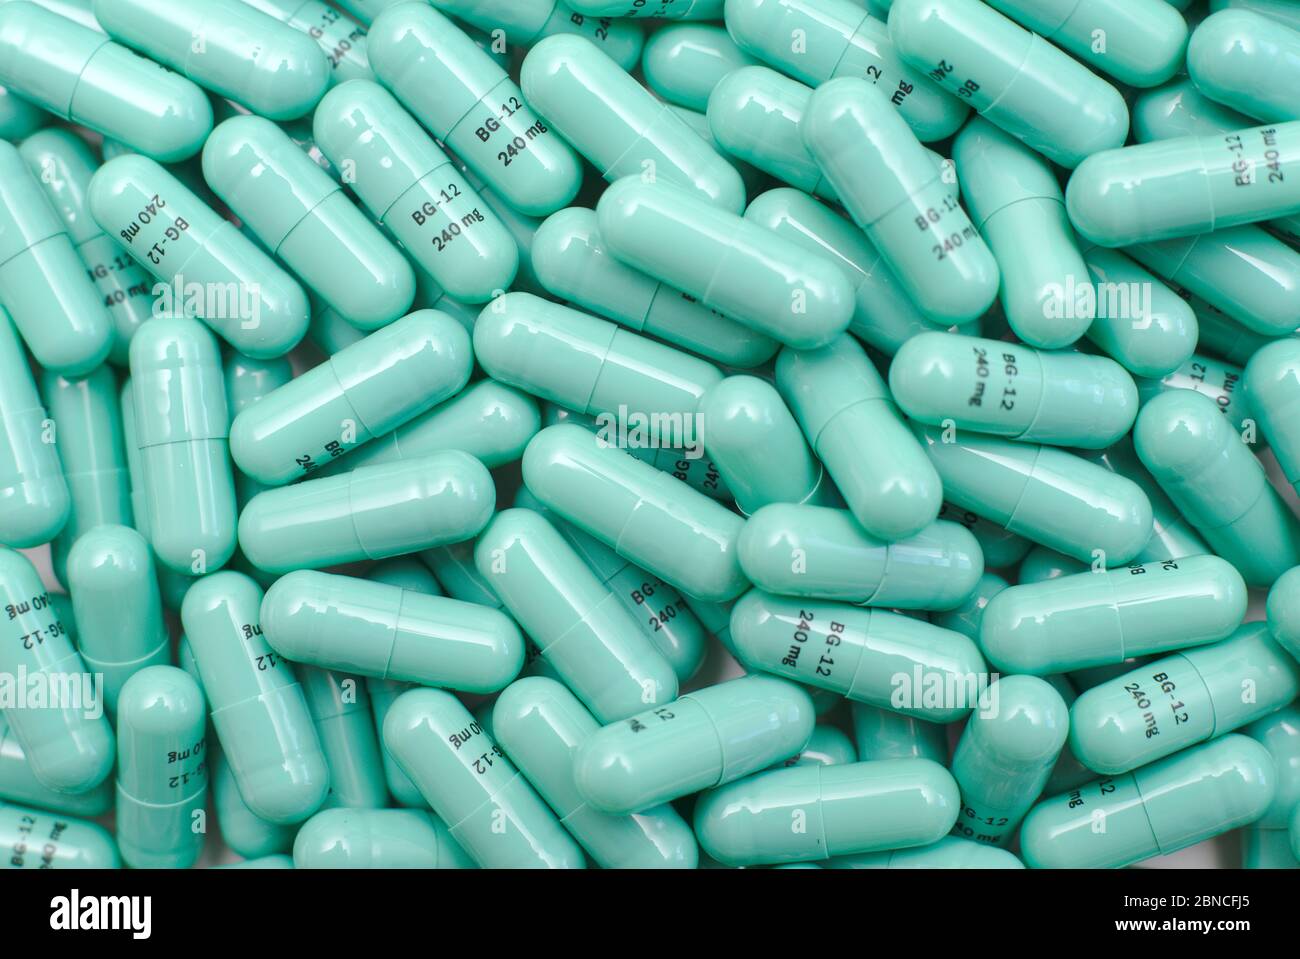 Tecfidera capsules - a drug used to reduce multiple sclerosis (MS) relapses. Stock Photo